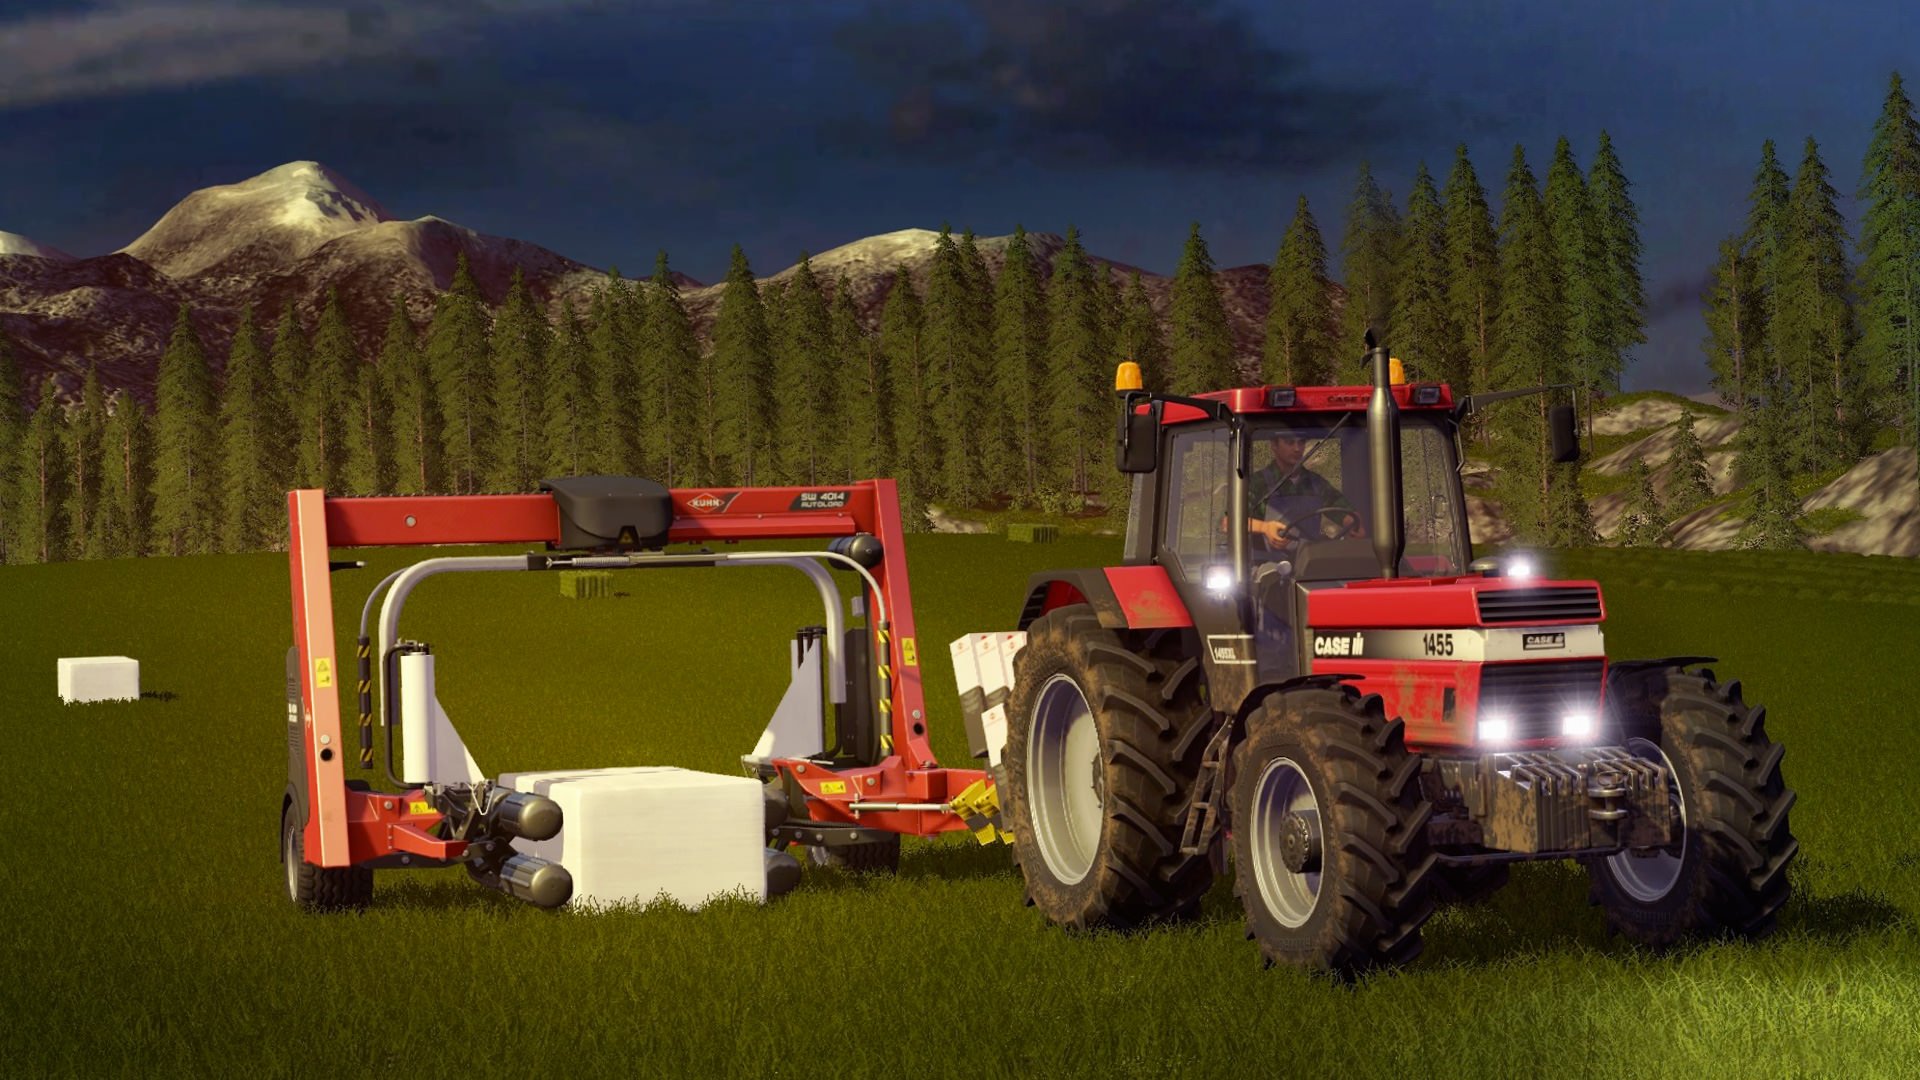 xbox 360 farming simulator 19